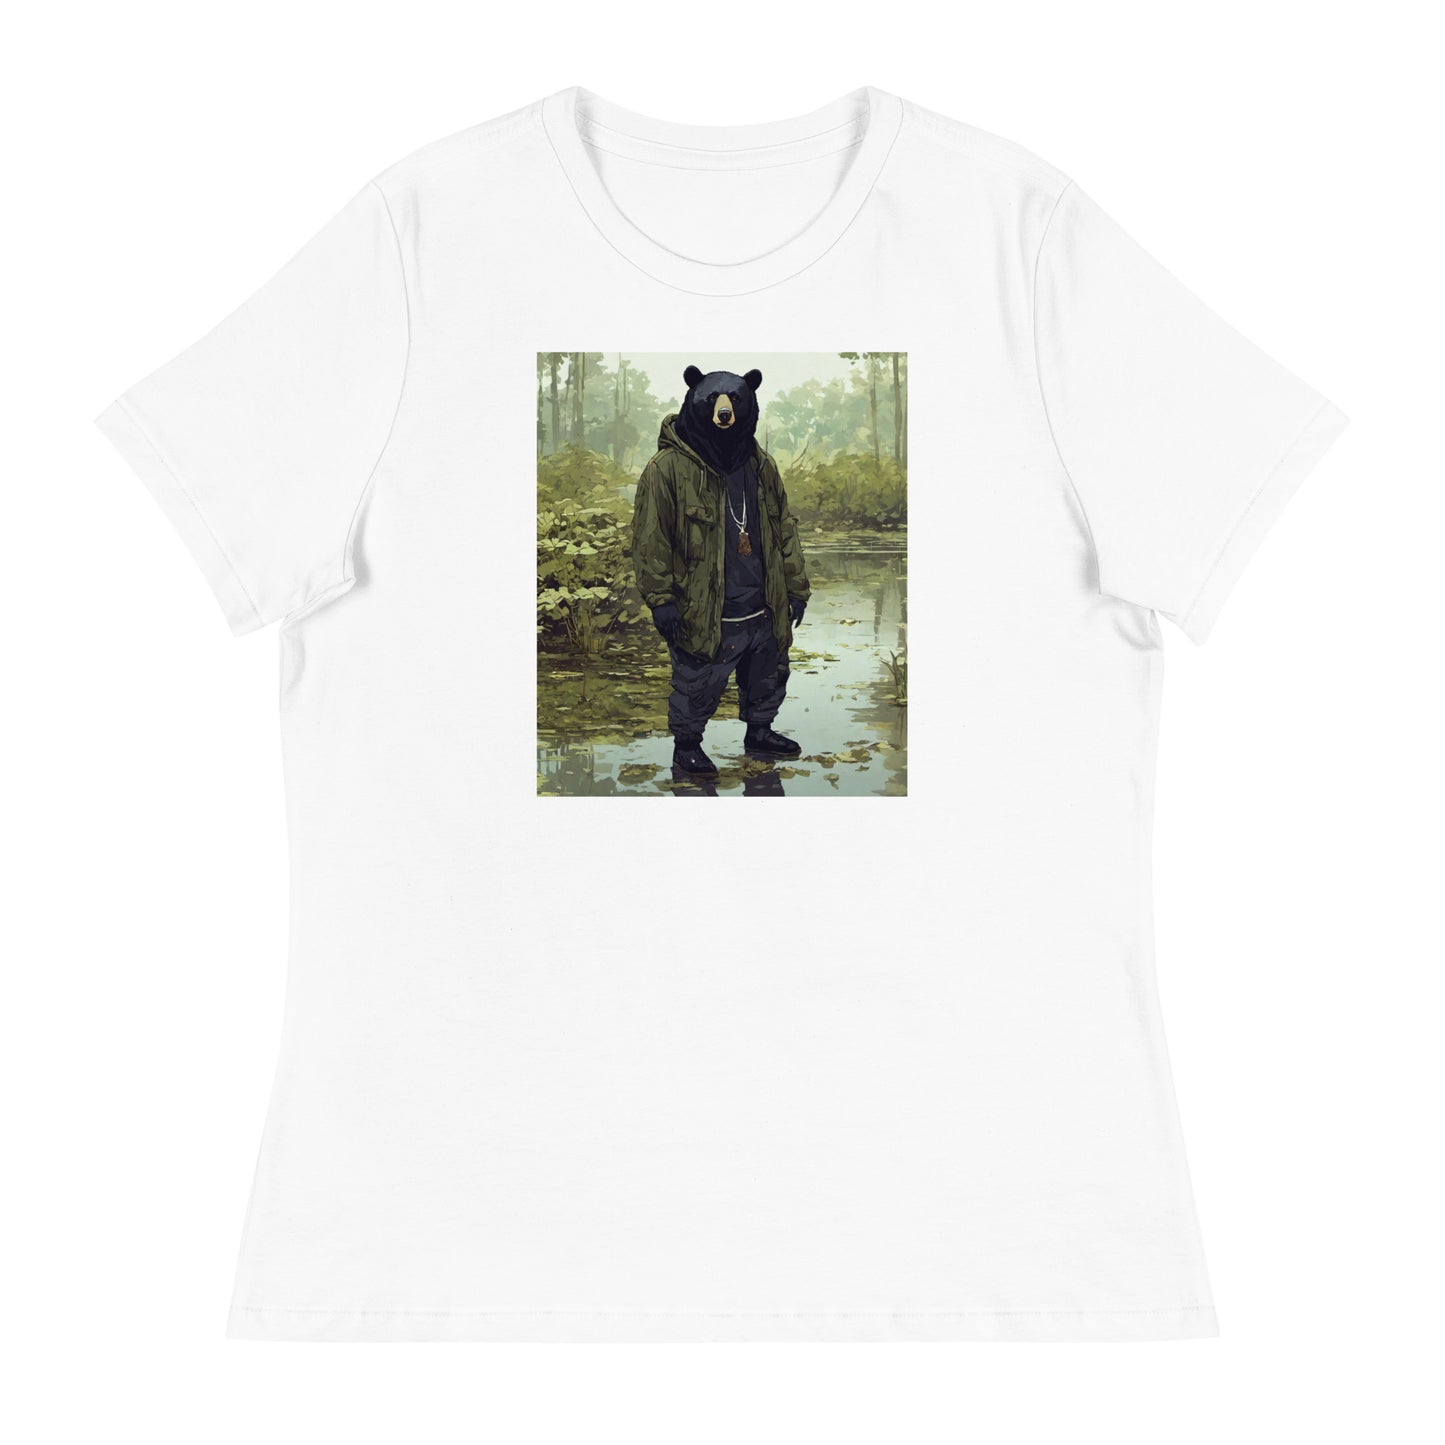 Stoic Black Bear Women's Graphic T-Shirt White